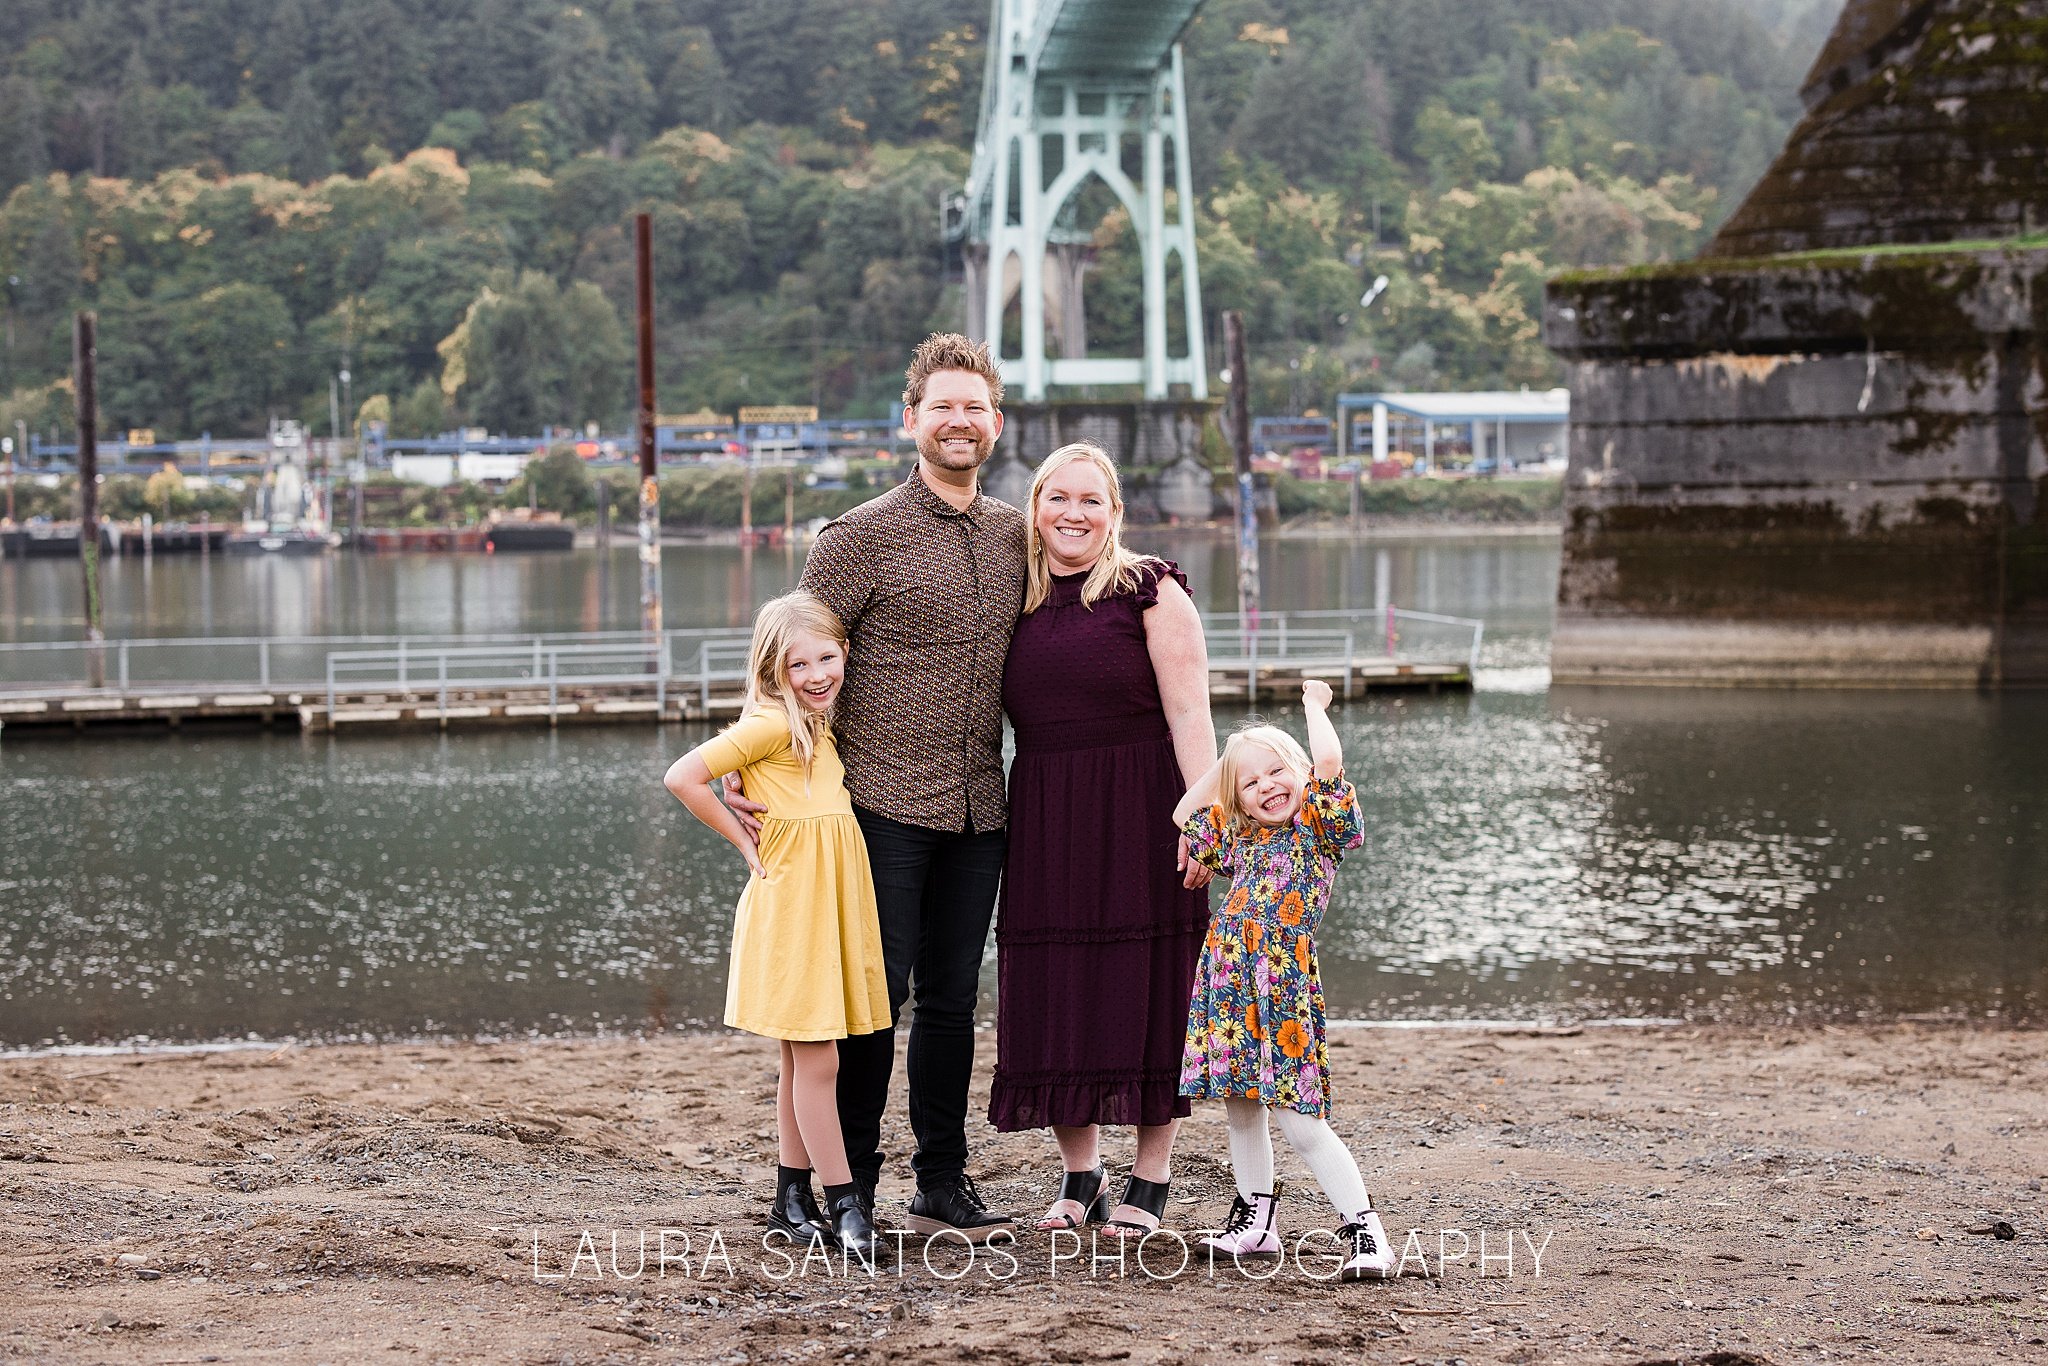 Laura Santos Photography Portland Oregon Family Photographer_4780.jpg